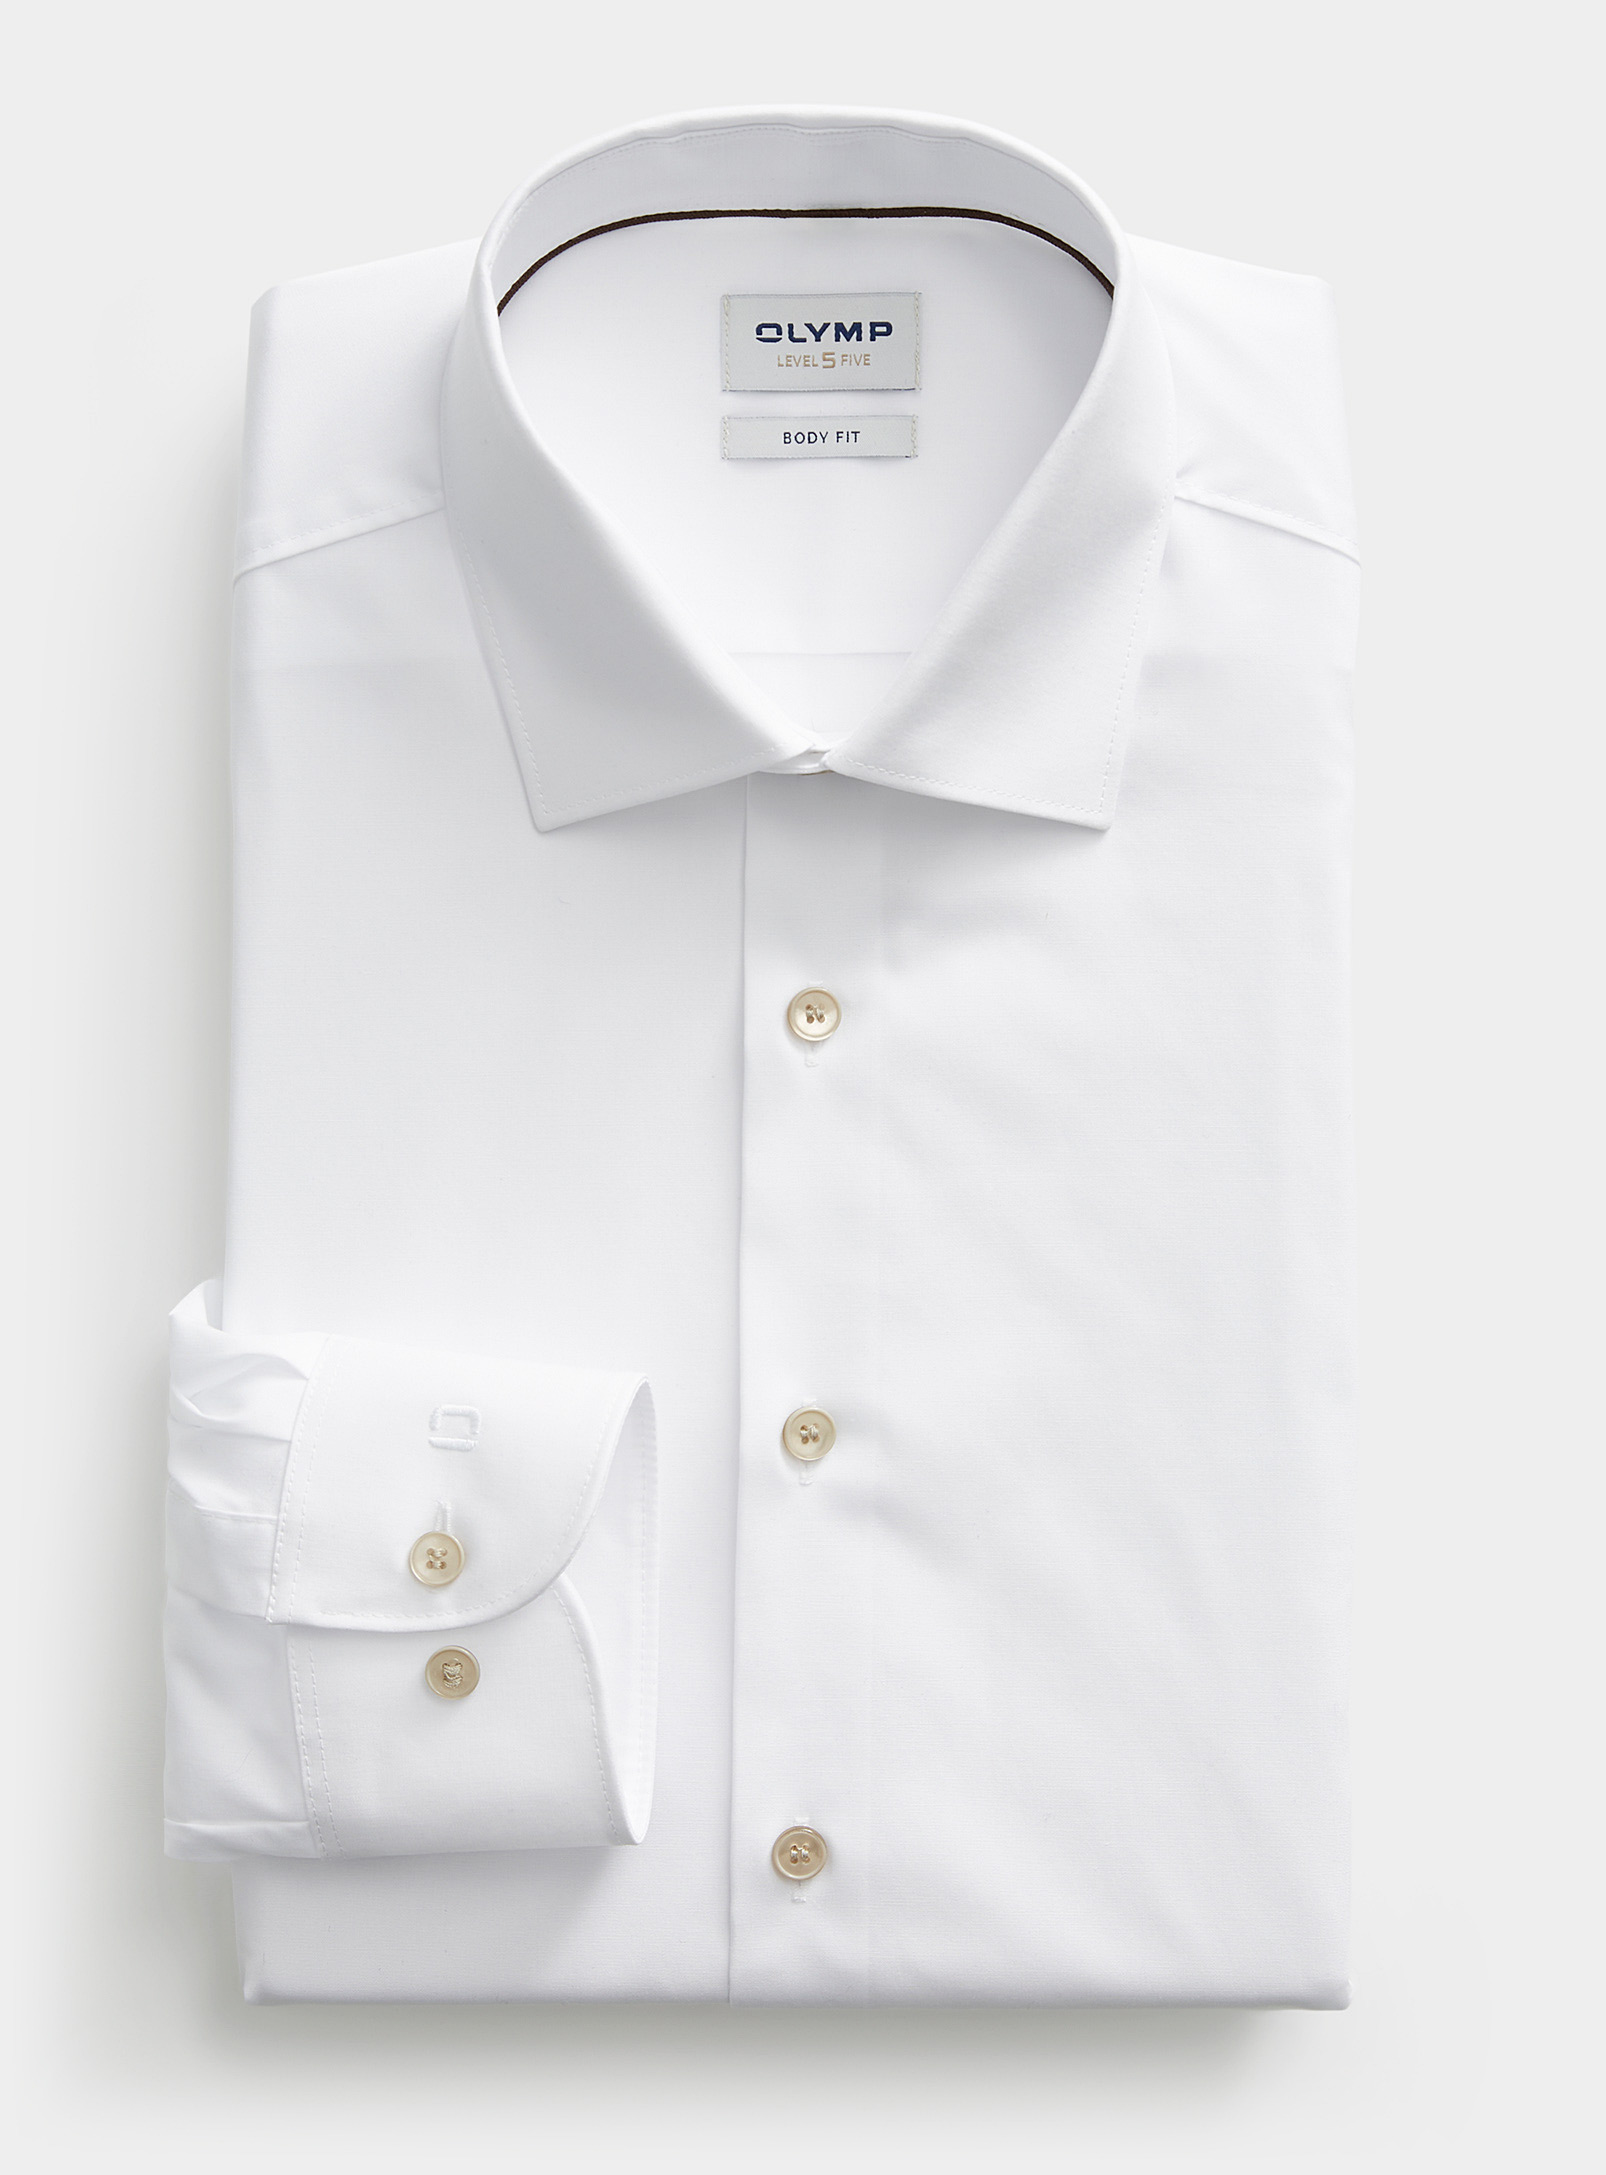 Olymp - La chemise blanche coton extensible Coupe moderne